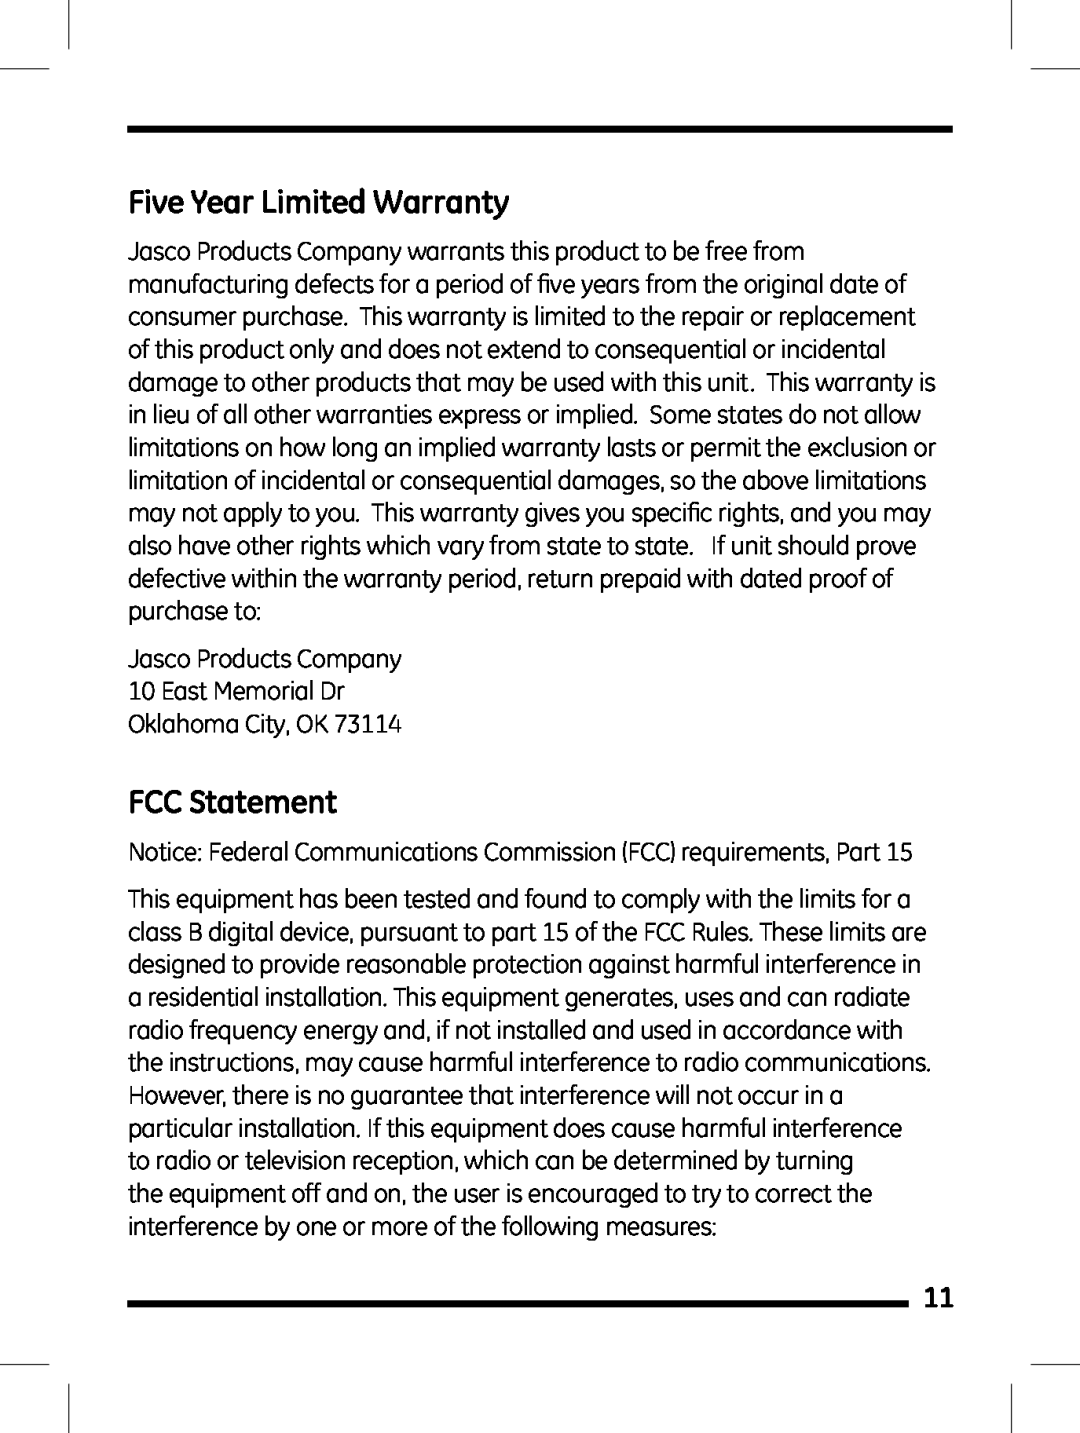 Jasco 98505 Five Year Limited Warranty, FCC Statement, Jasco Products Company 10 East Memorial Dr Oklahoma City, OK 